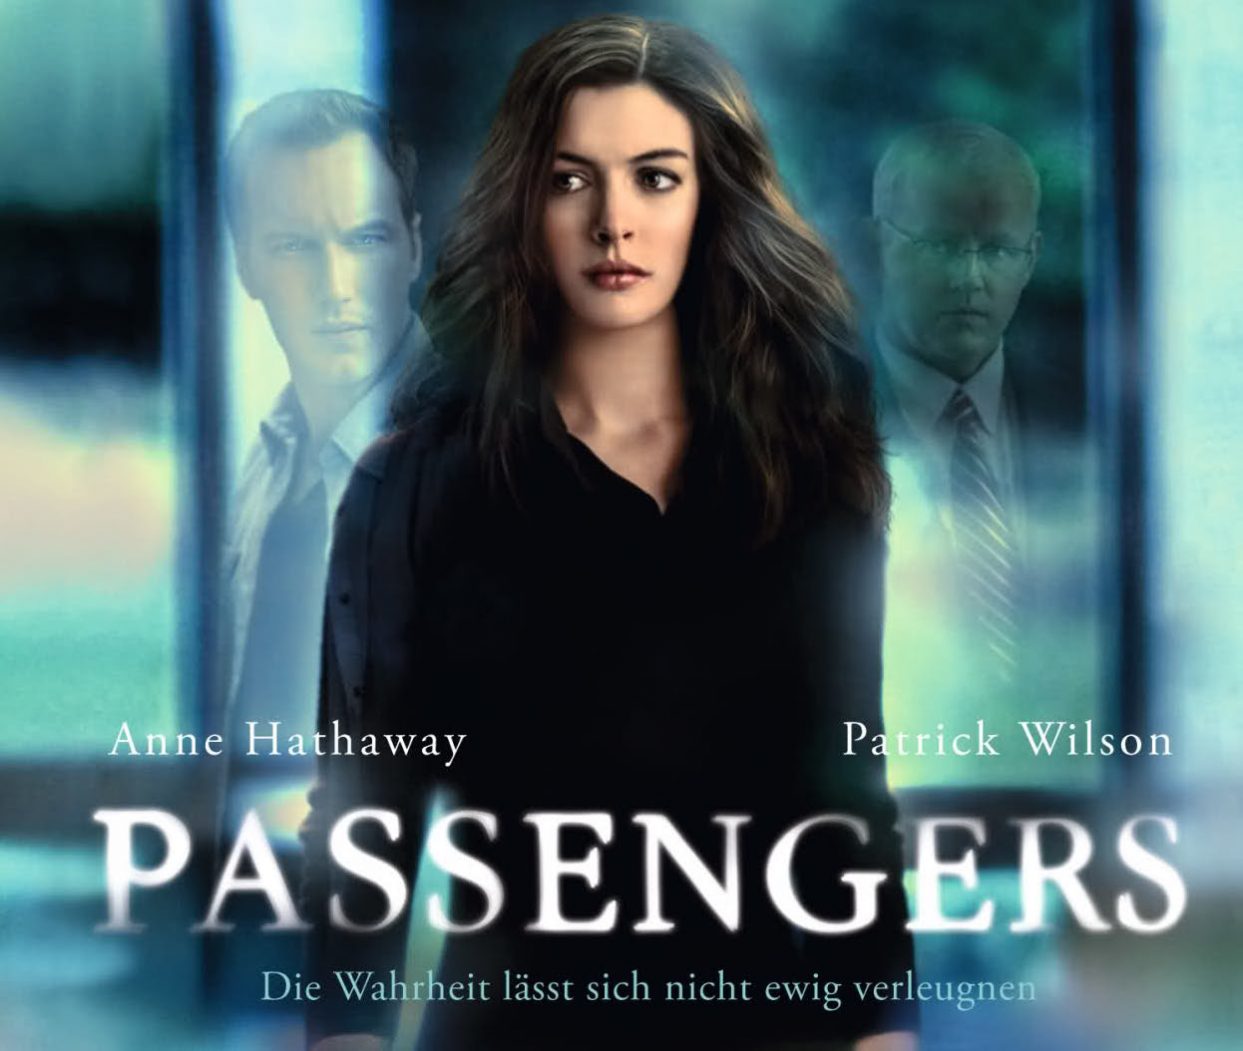 Passengers (2008)